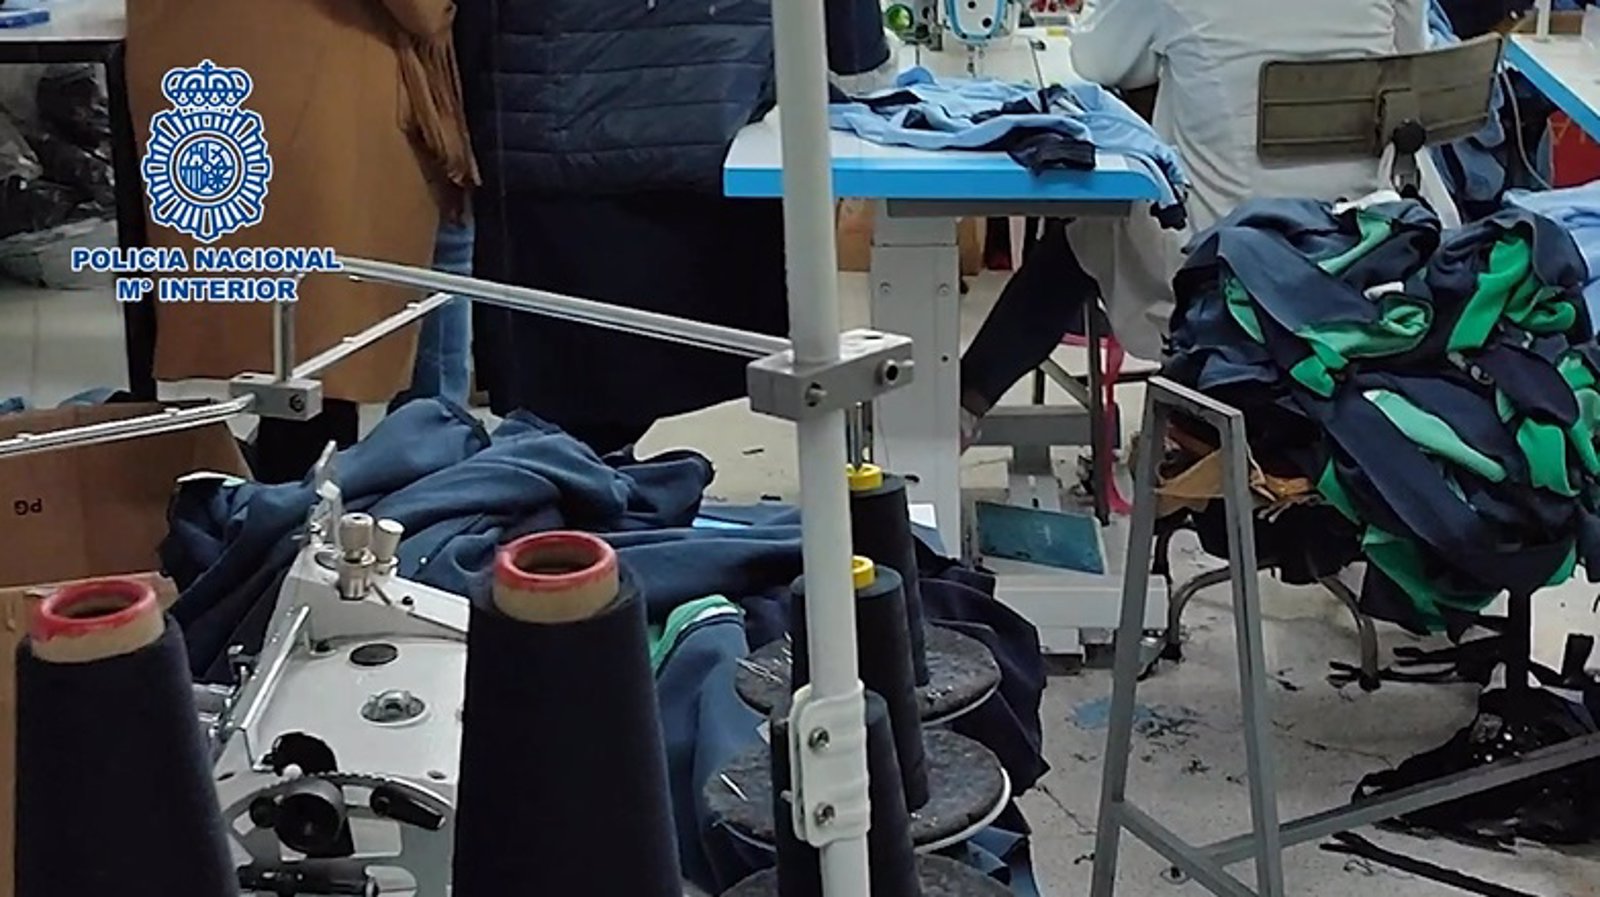 Desmantelado un taller de costura clandestino en Carabanchel donde se explotaba a extranjeros